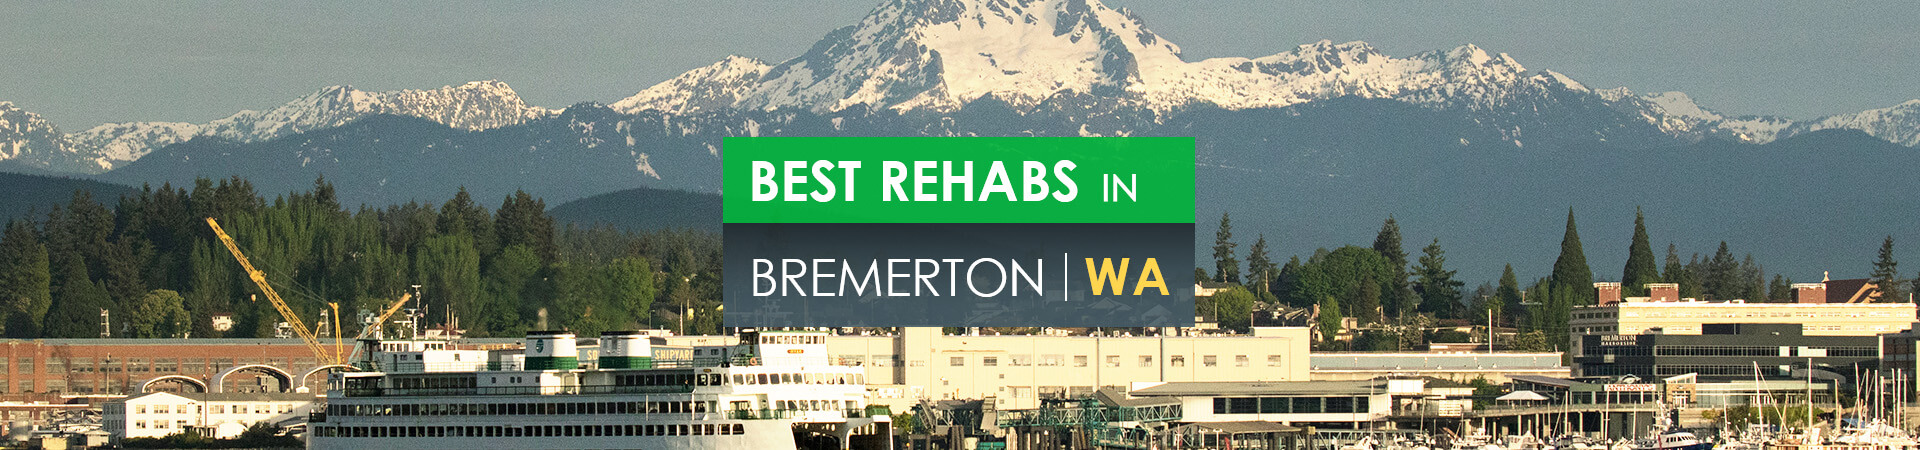 Best rehabs in Bremerton, WA